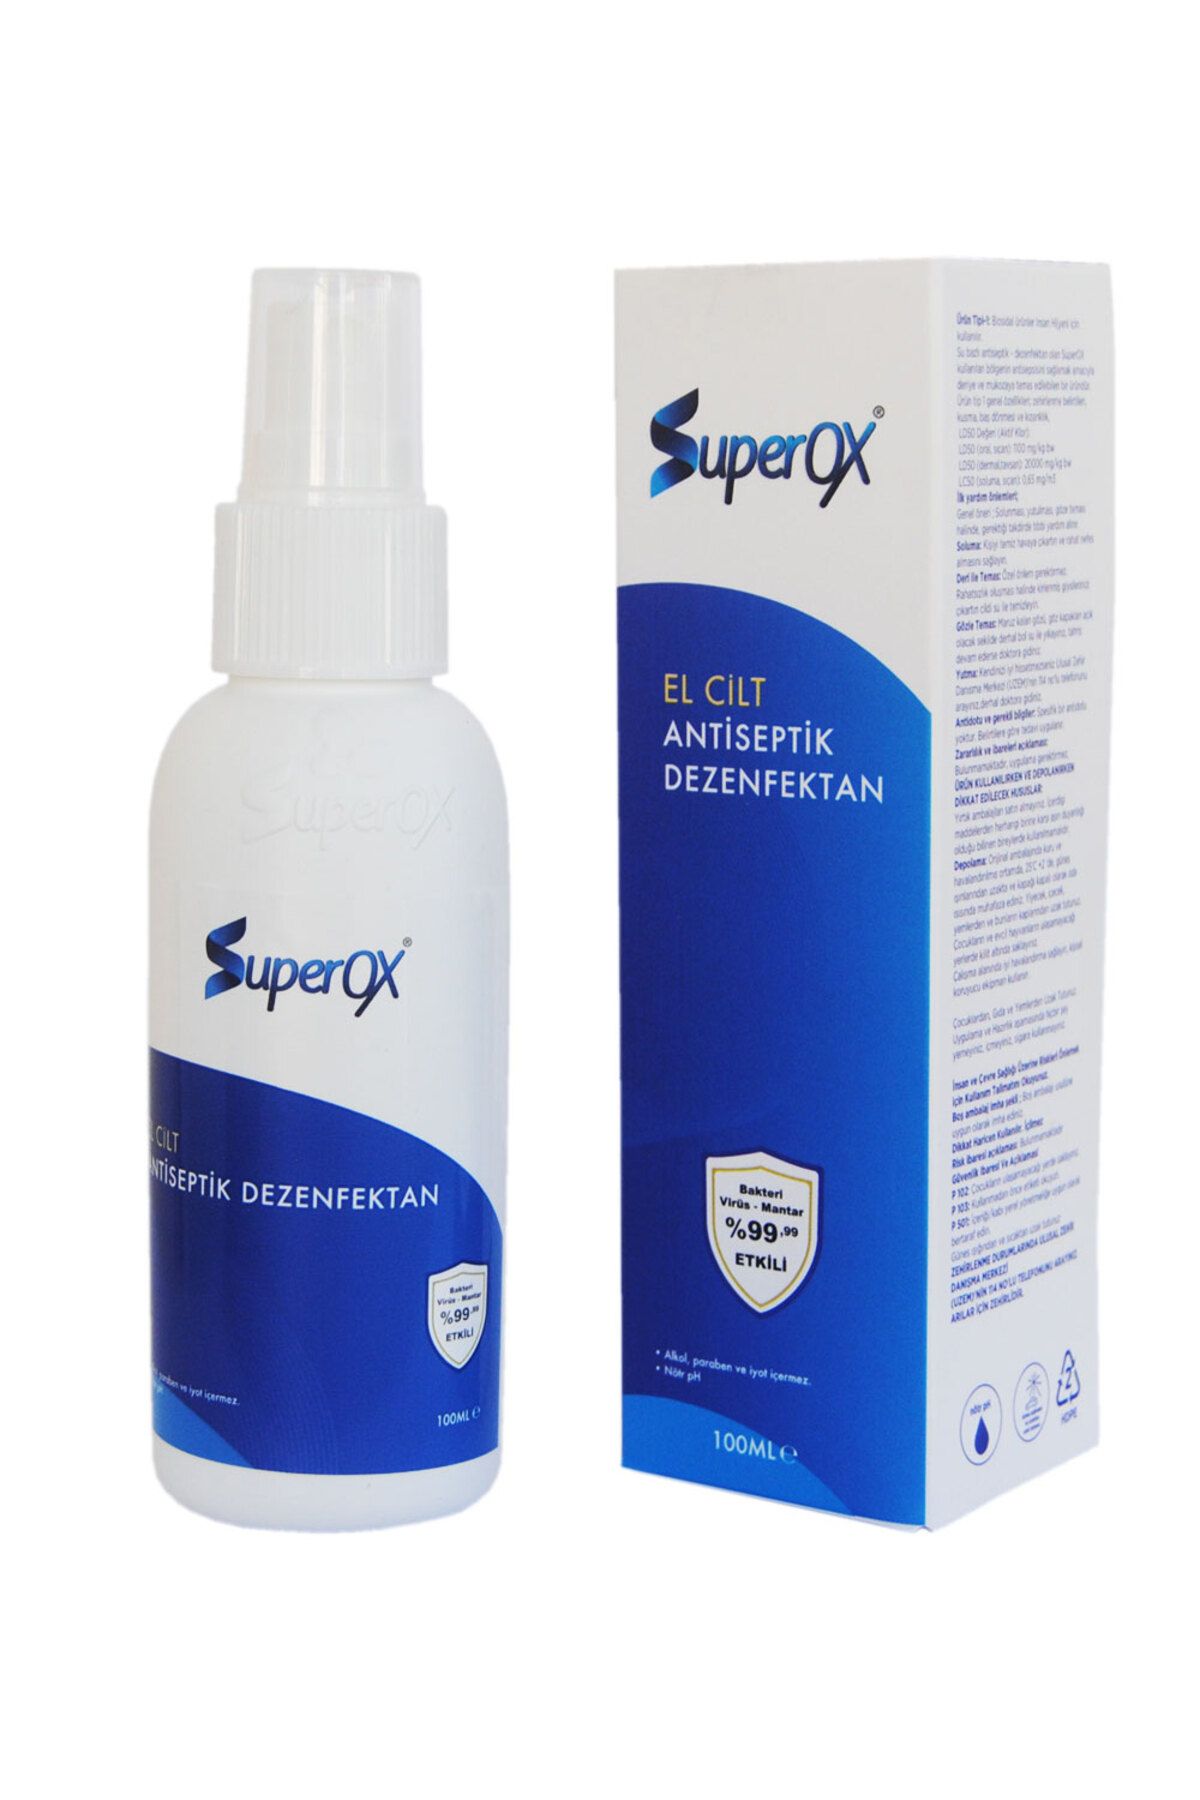 SuperOX Hipokloröz (hocl) Alkolsüz Su Bazlı Bakteri Virüs Etkili El Cilt Antiseptik Dezenfektanı 100 Ml.